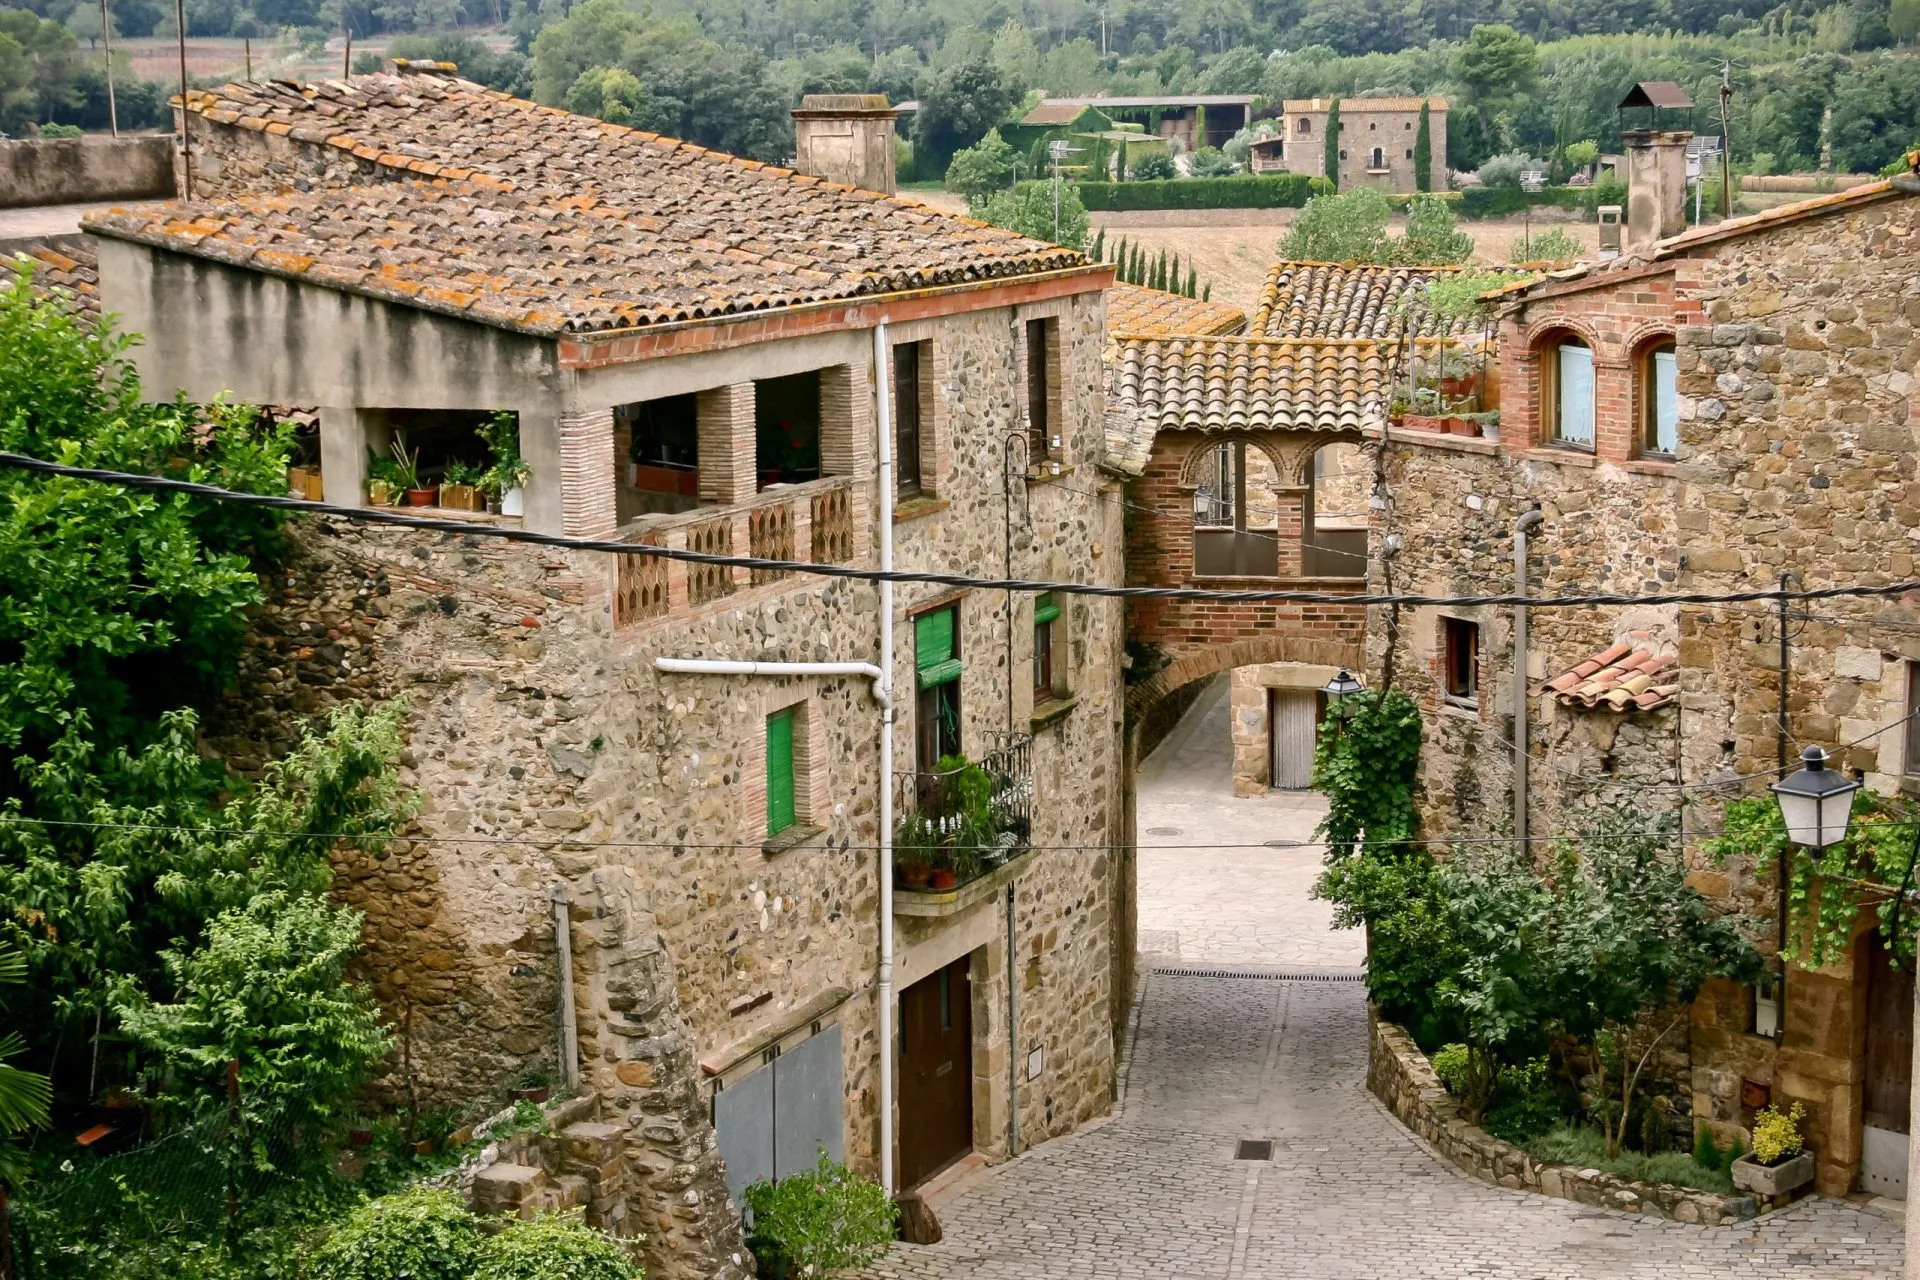 Picturesque street in Spanish village of Pubol.